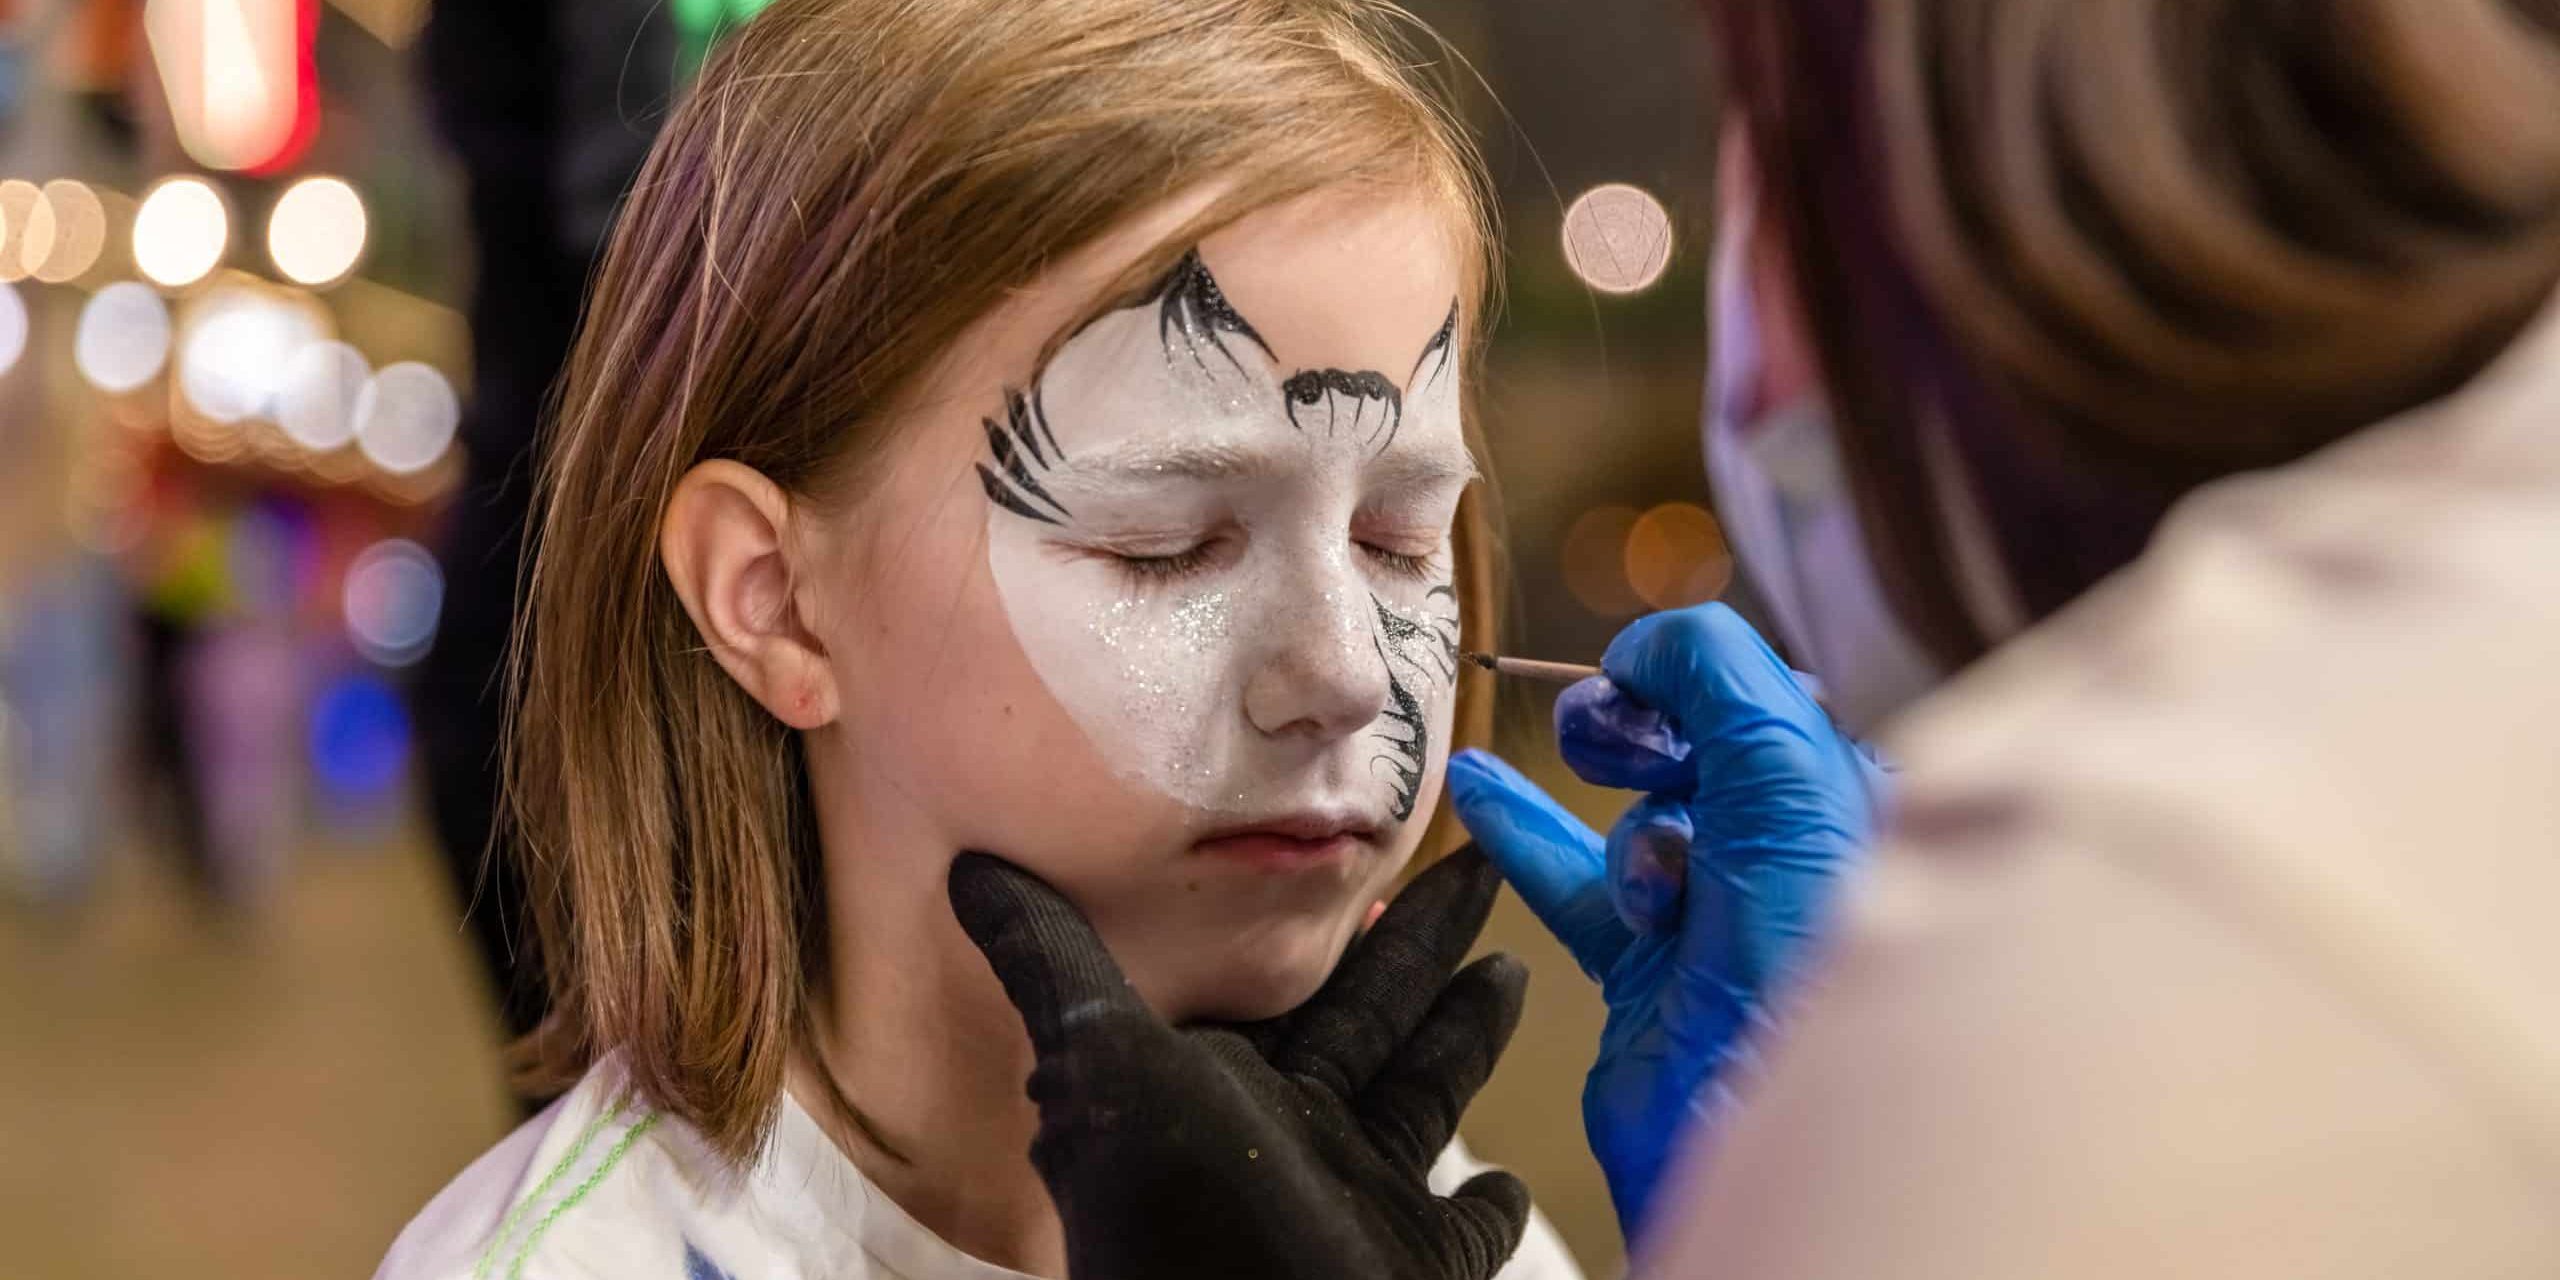 children-s-make-up-the-girl-s-face-is-painted-lik-2022-11-16-08-47-47-utc